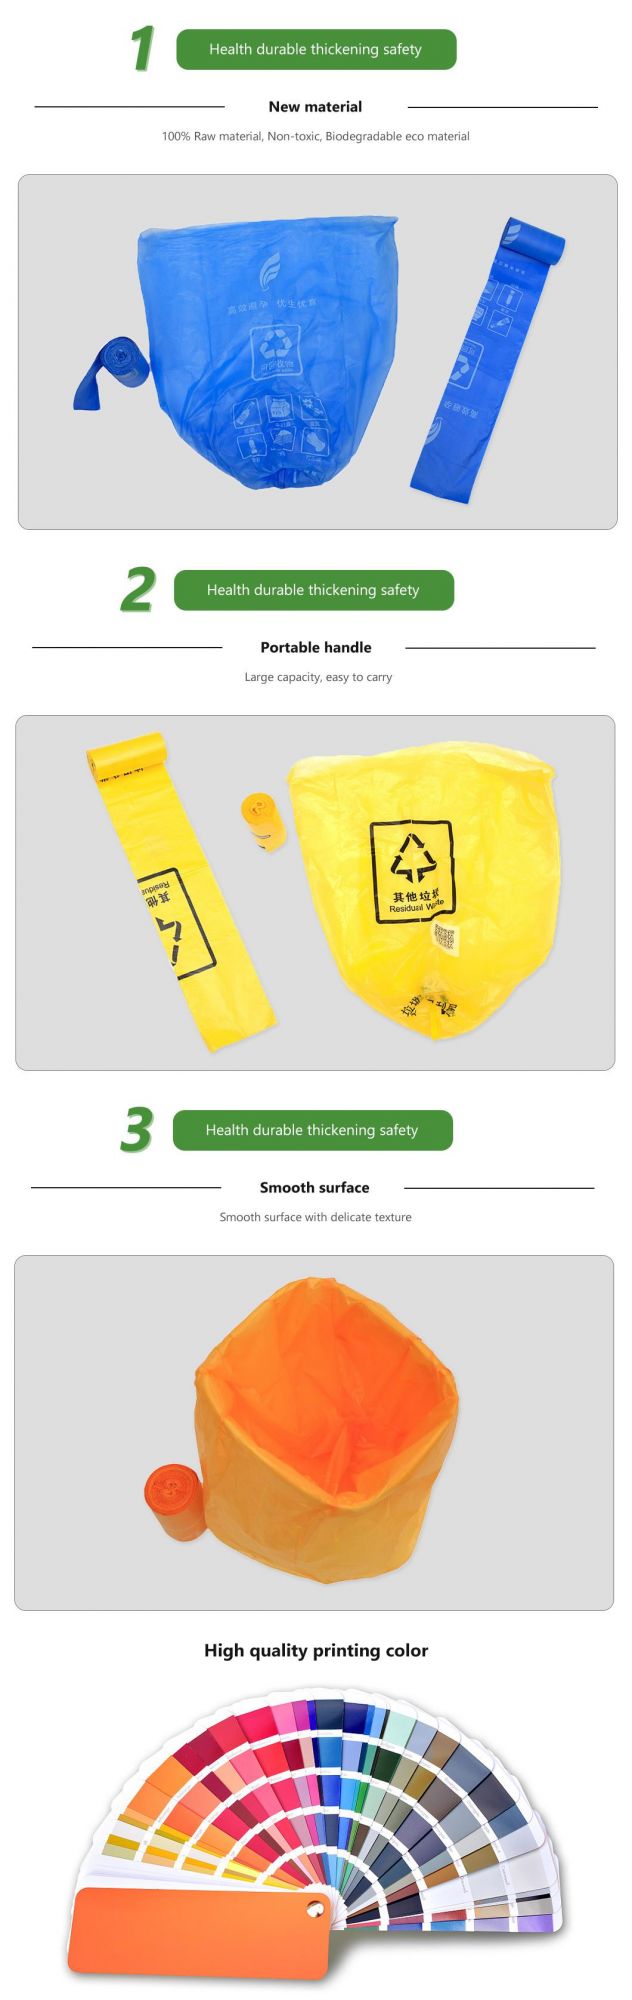 PLA+Pbat/Pbat+Corn Starch Biodegradable Bags, Compostable Bags, Bin Bags for Home